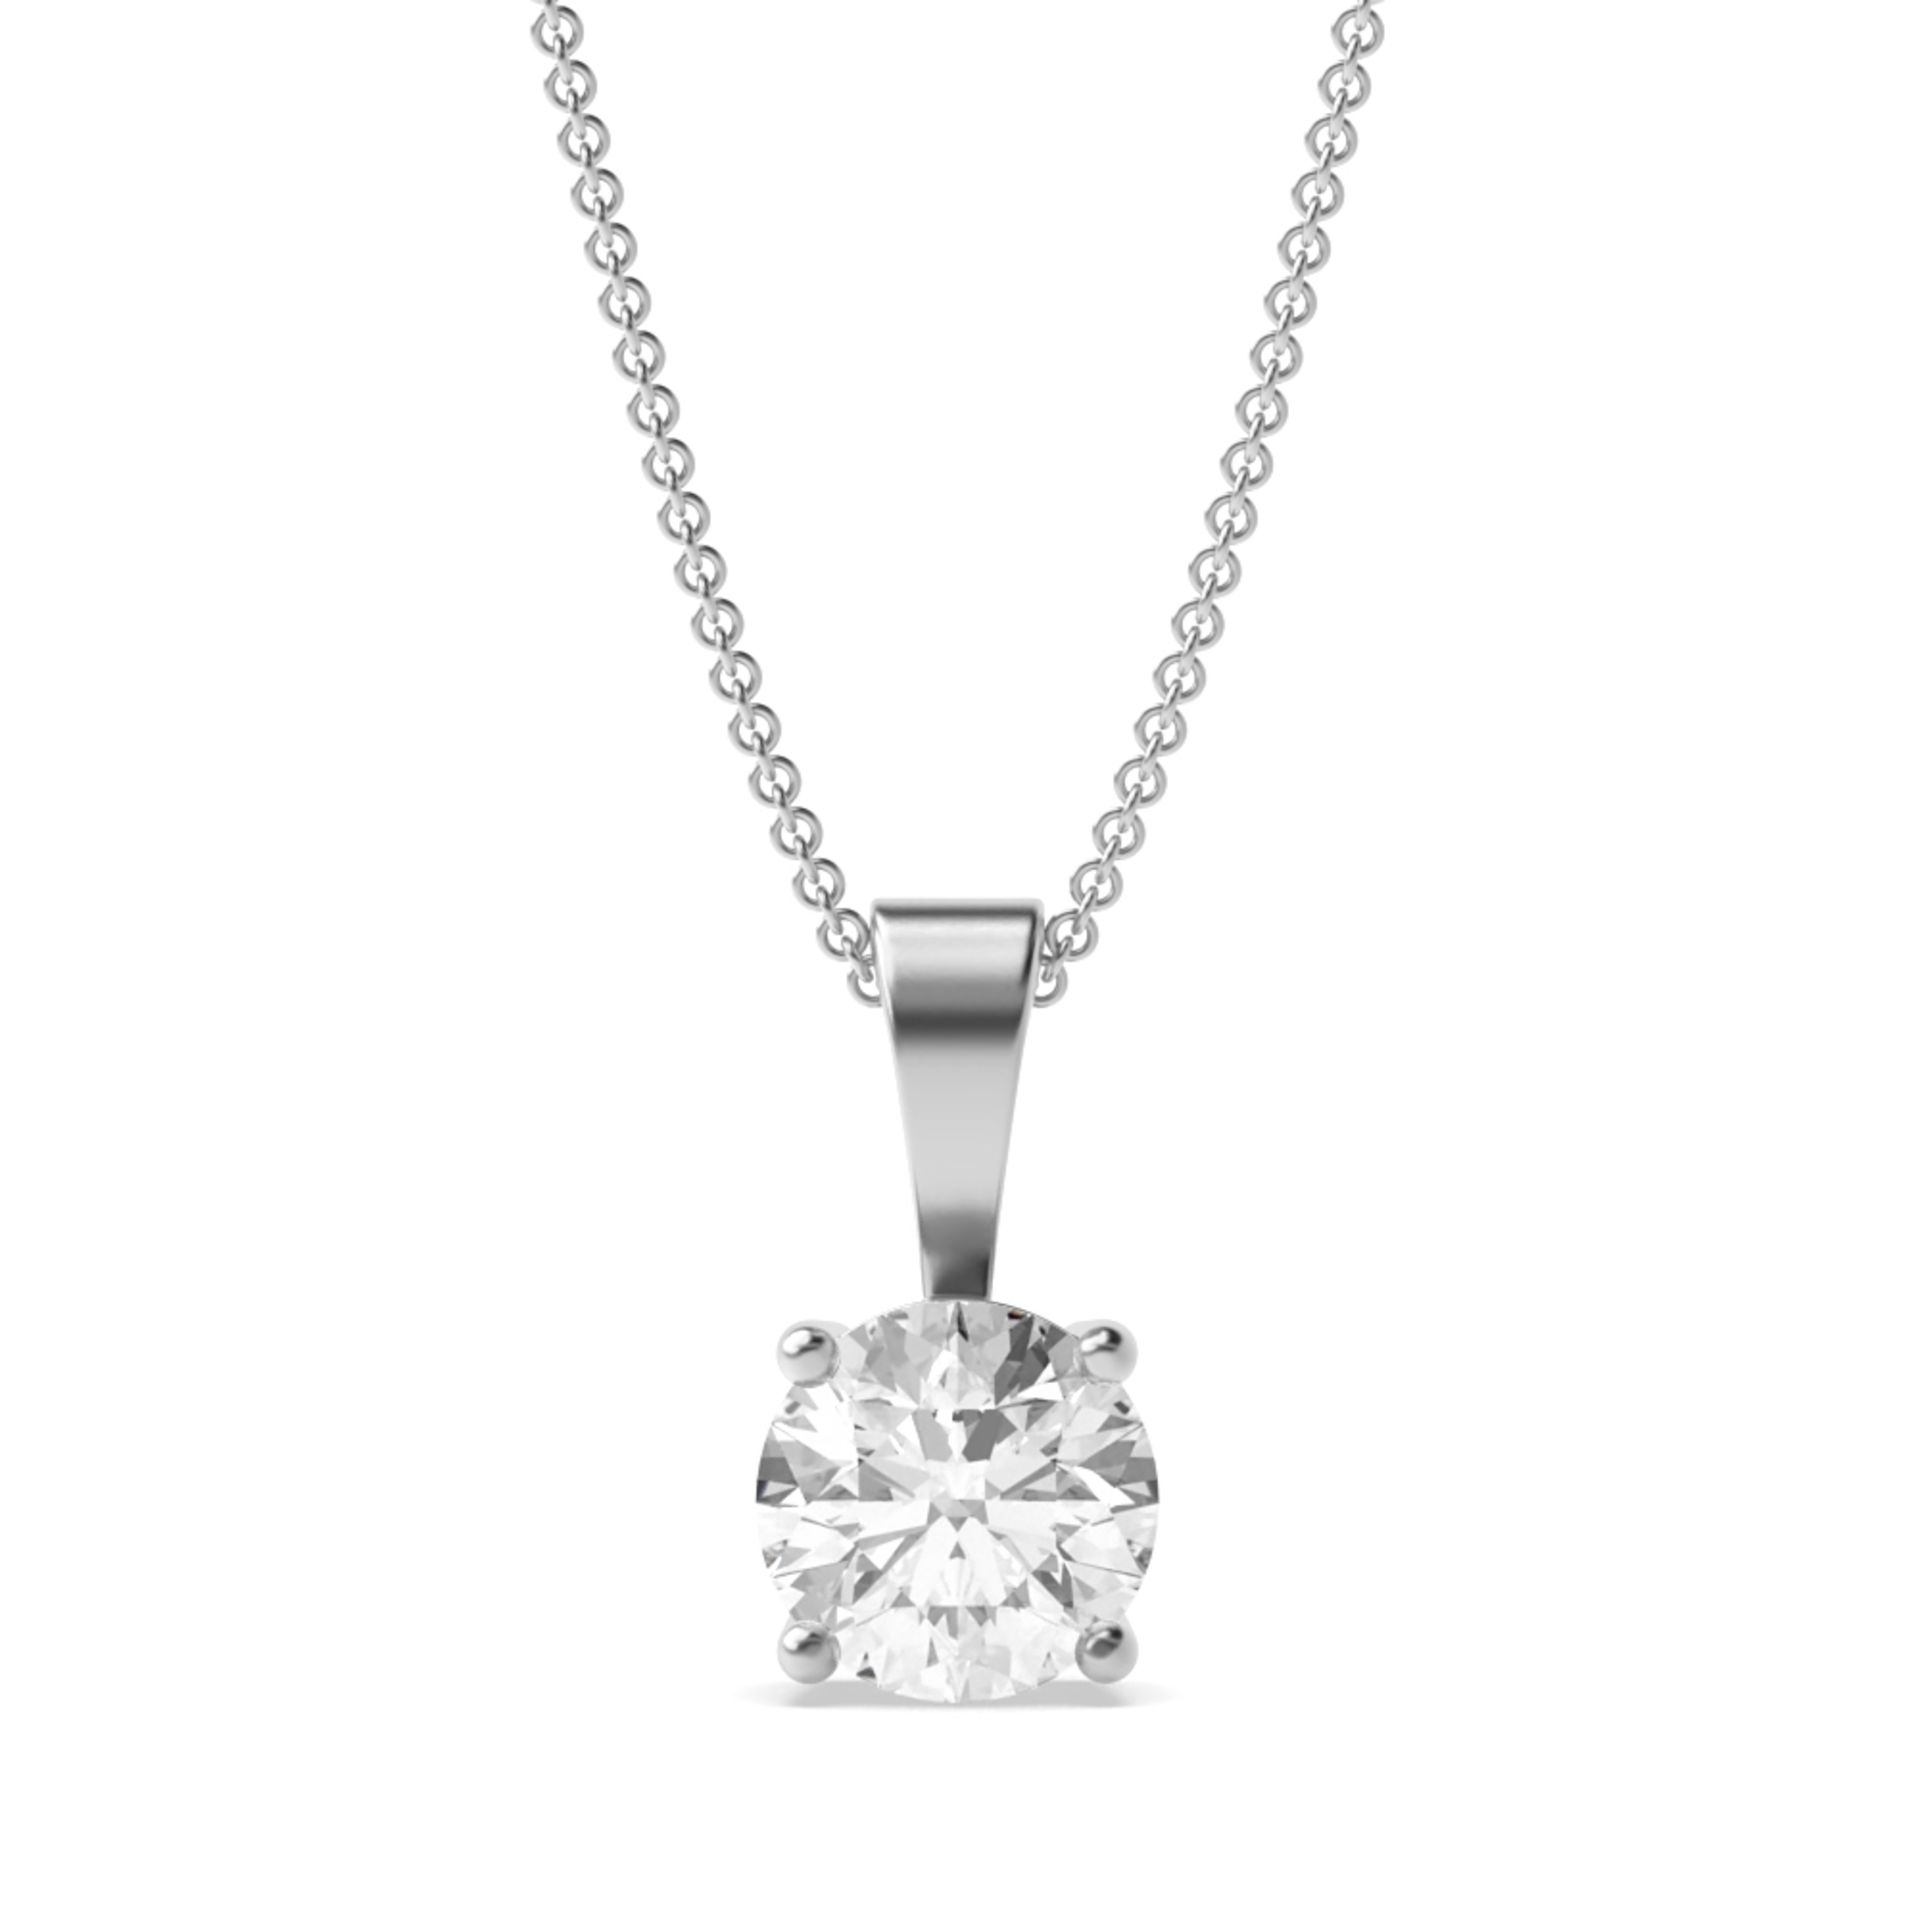 ** ON SALE ** Round Brilliant Cut Diamond 1.00 Carat D Colour VS1 Clarity - Necklace Pendant